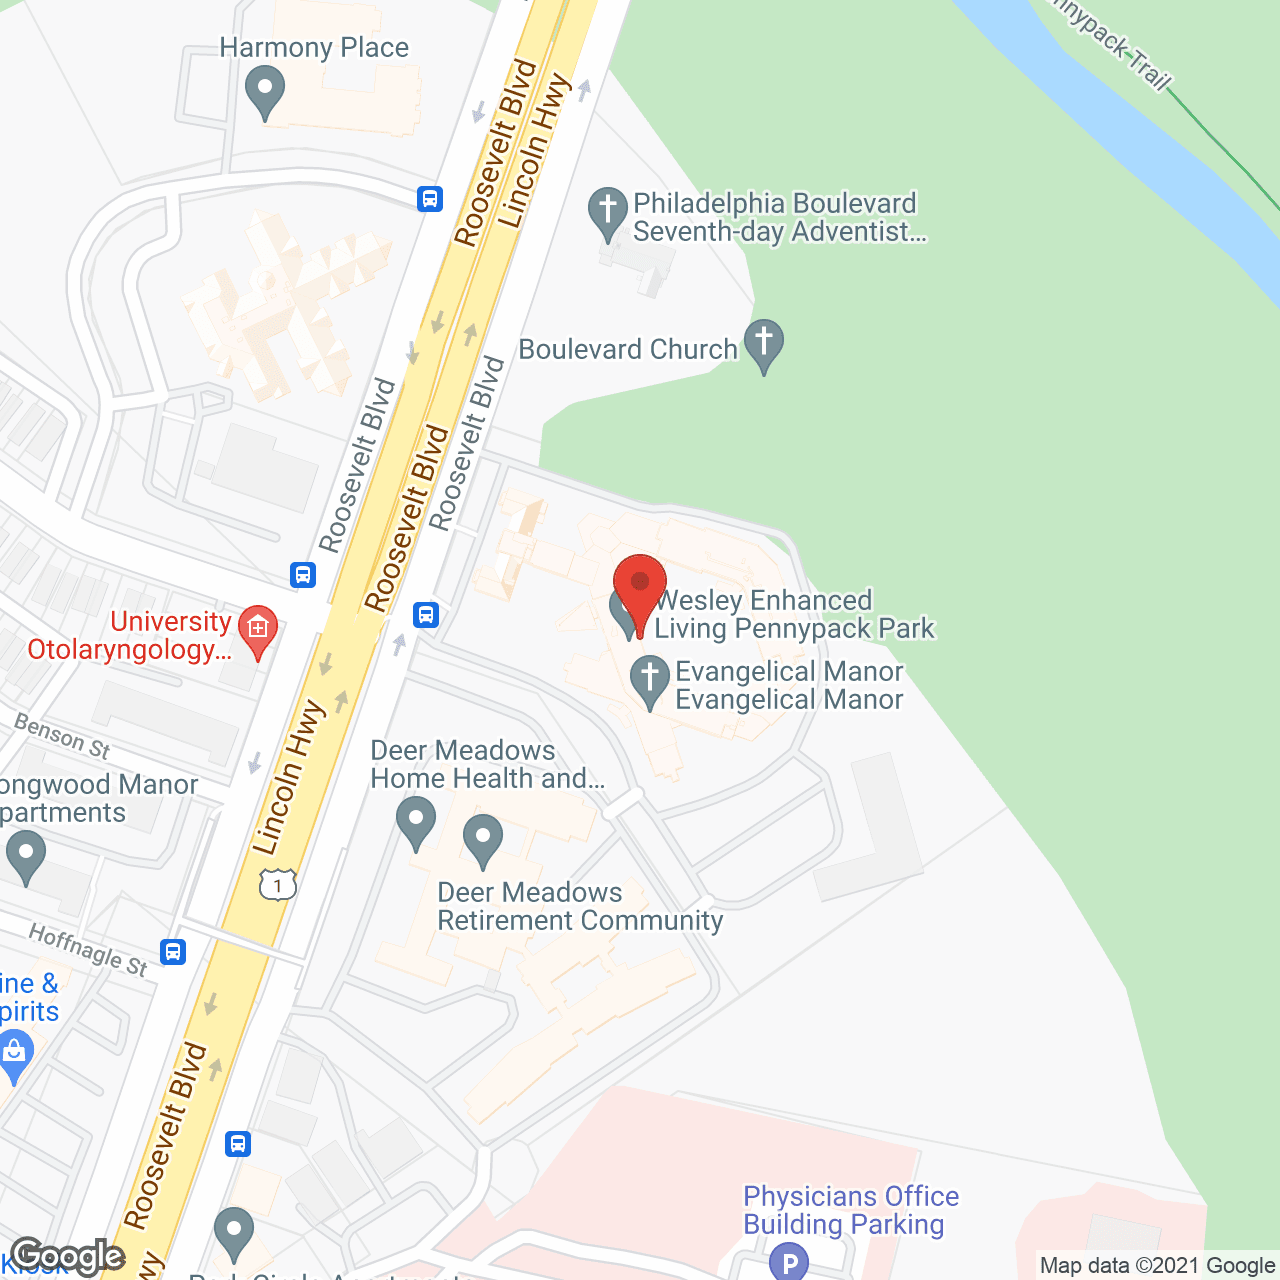 Evangelical Manor in google map